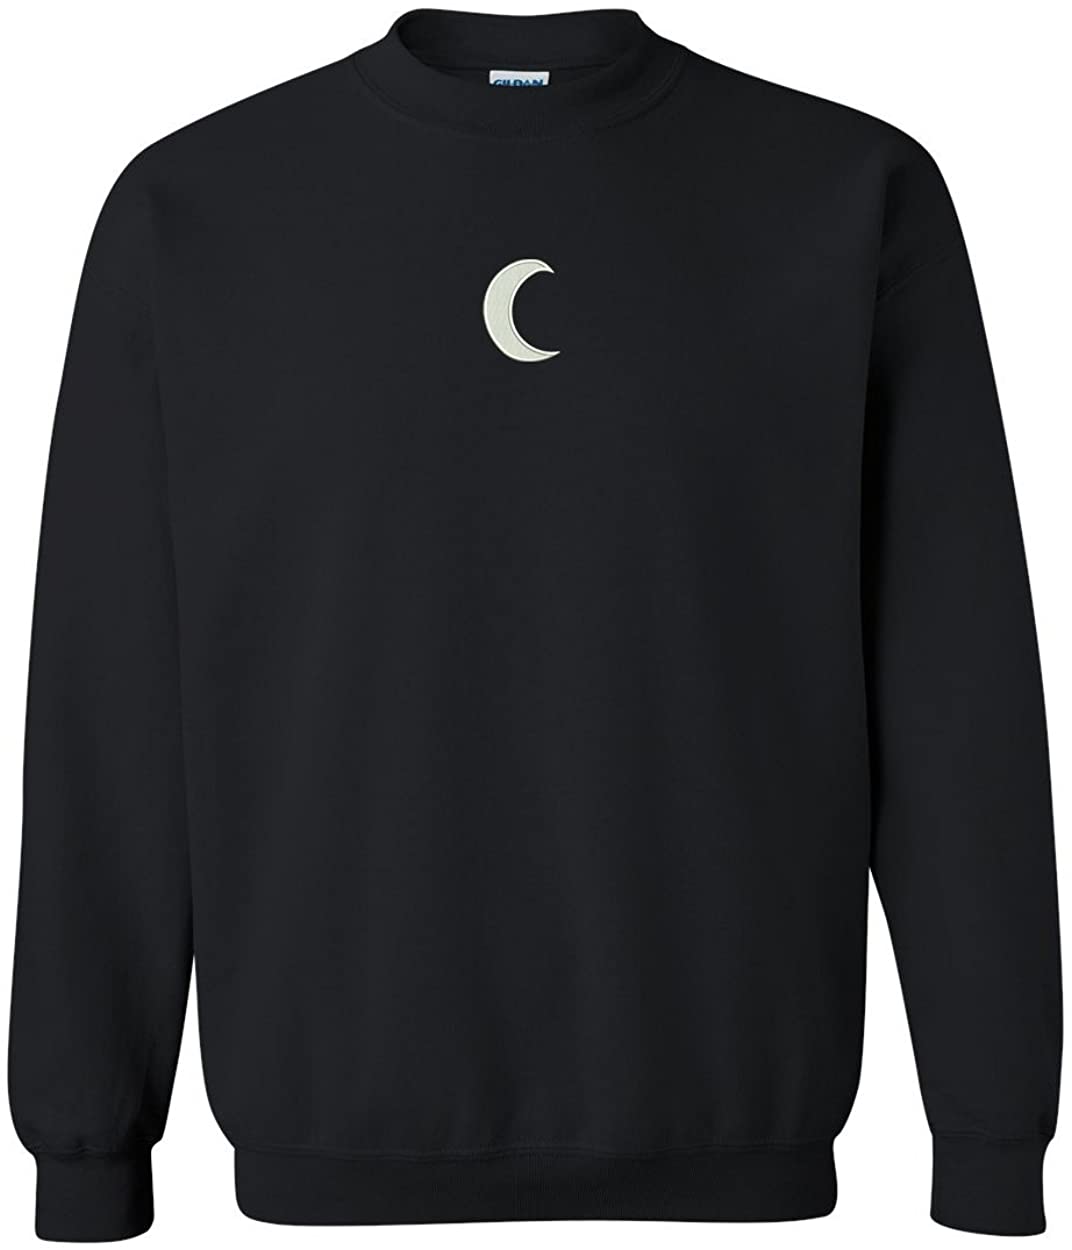 Trendy Apparel Shop Crescent Moon Embroidered Crewneck Sweatshirt - Black - 2XL